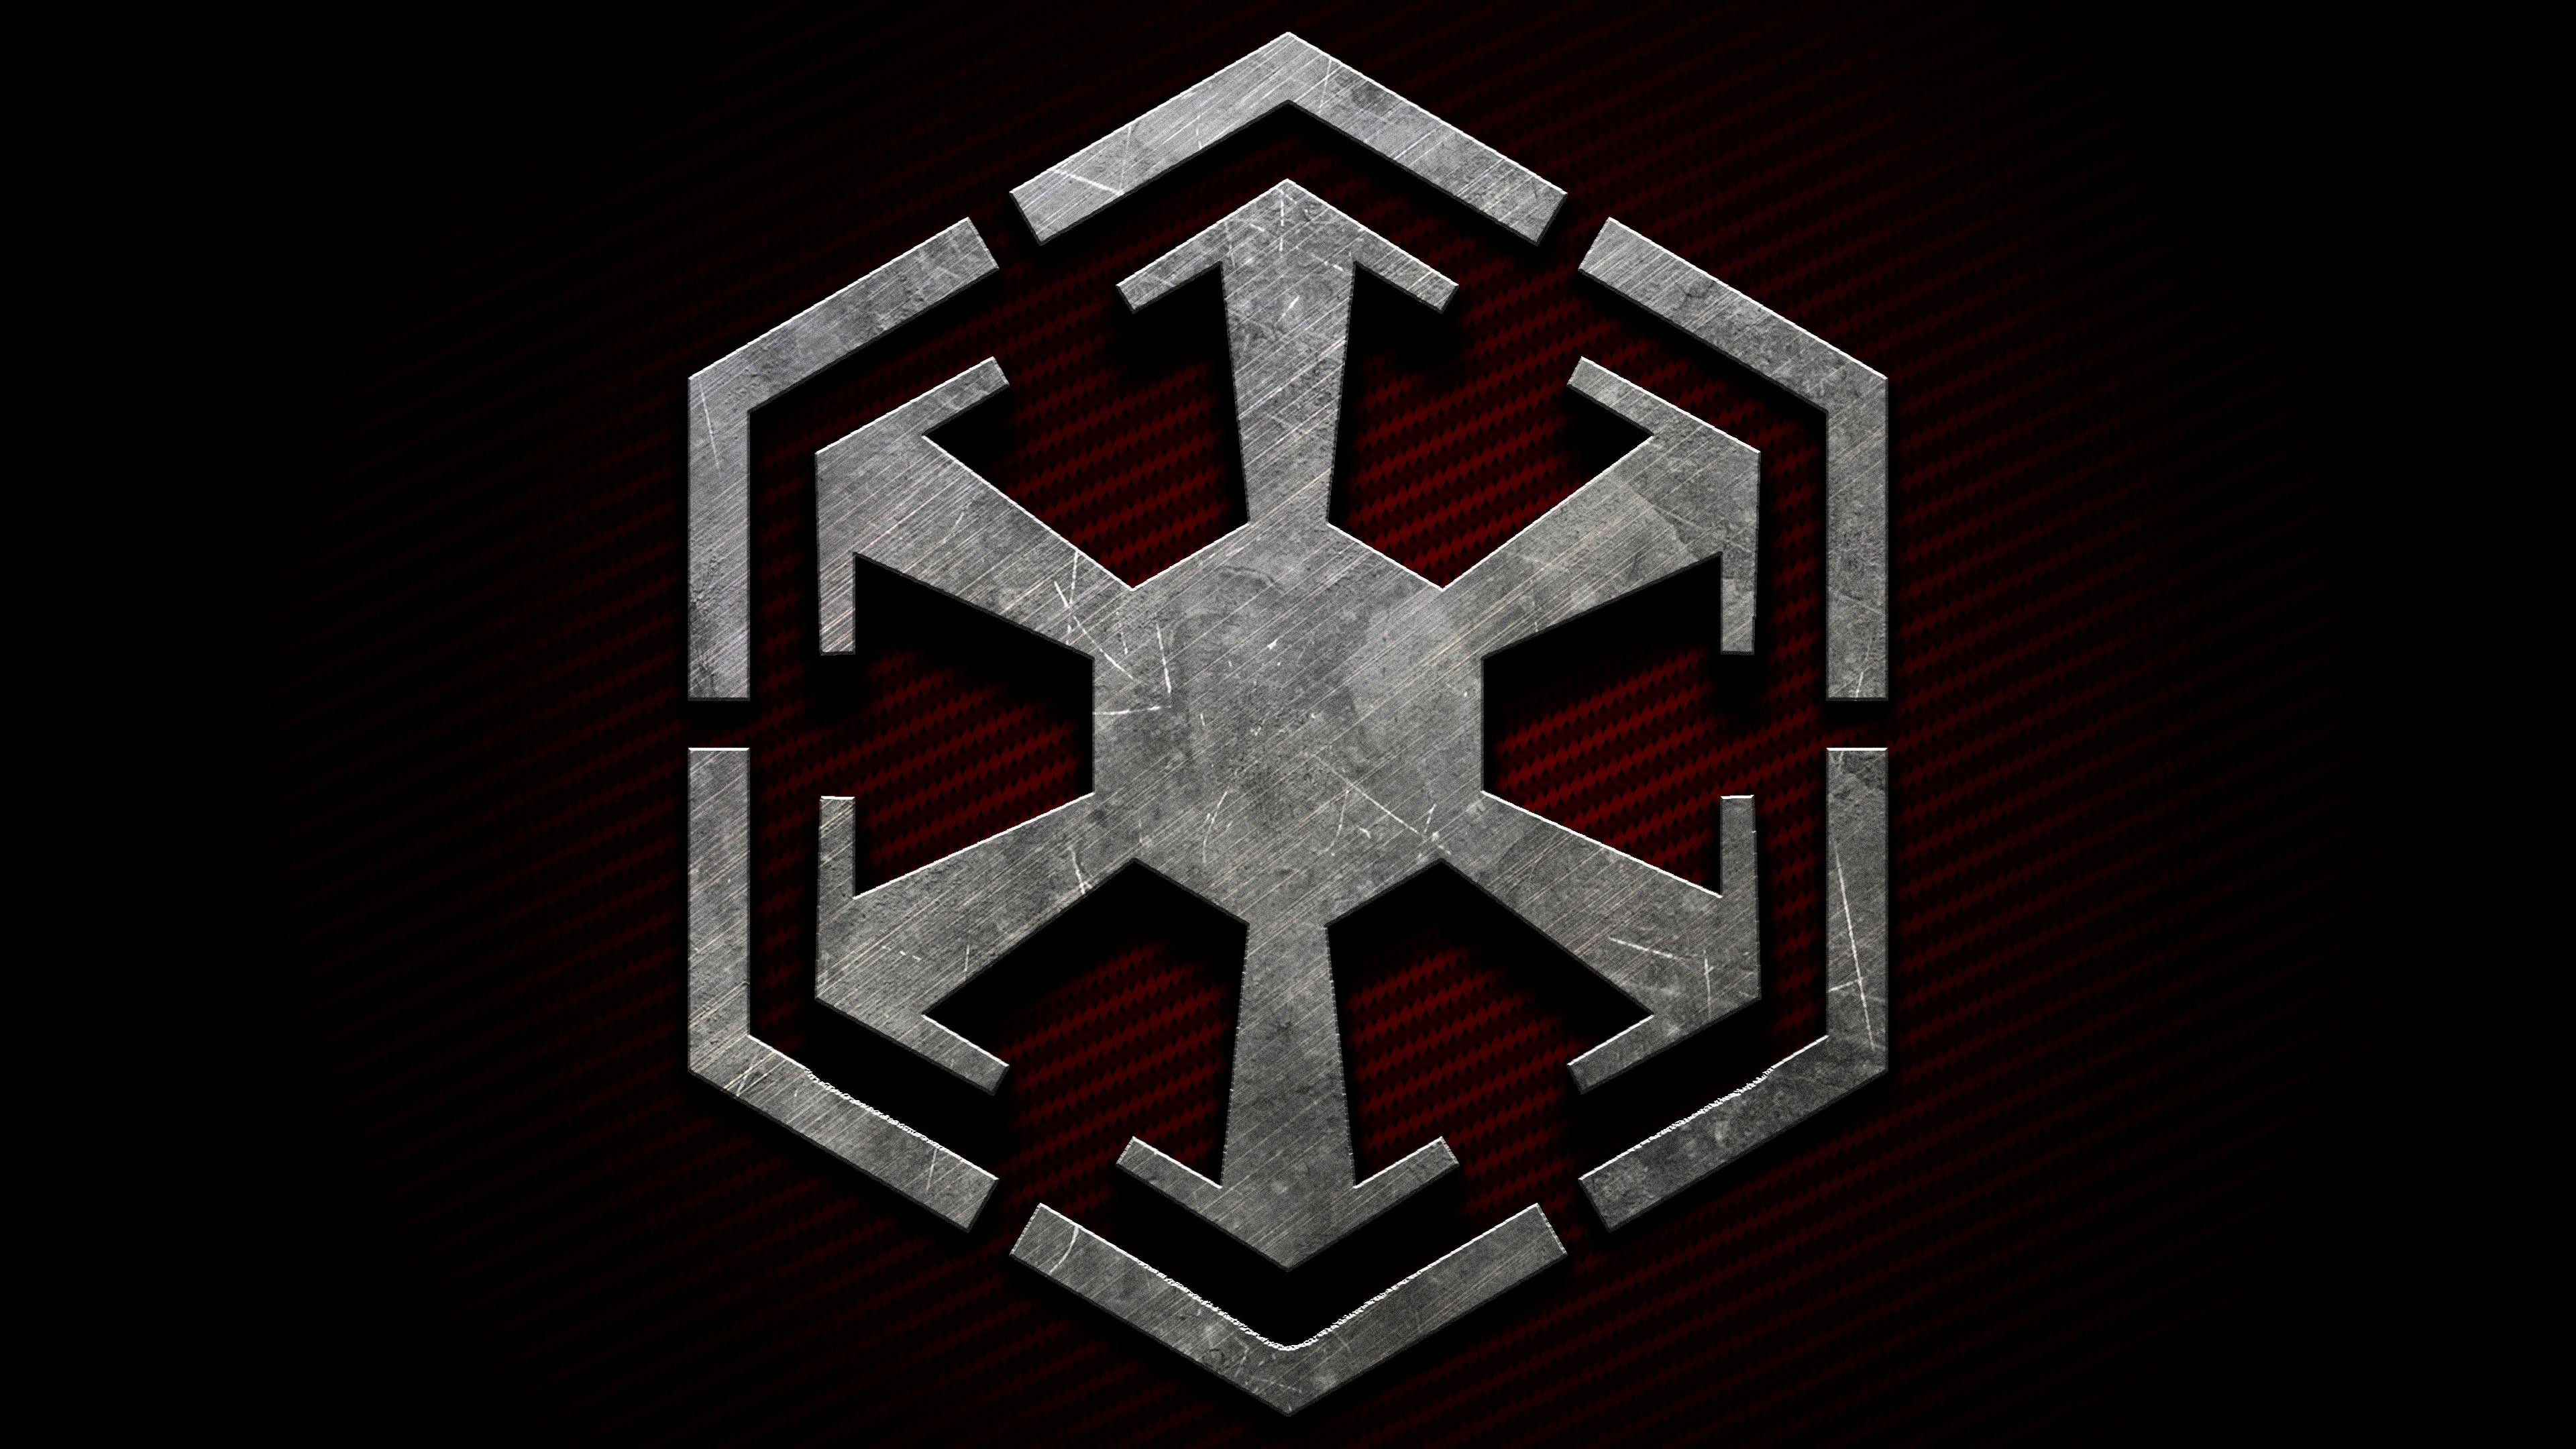 3840x2160 4k Star Wars Old Republic Empire symbol : wallpapers